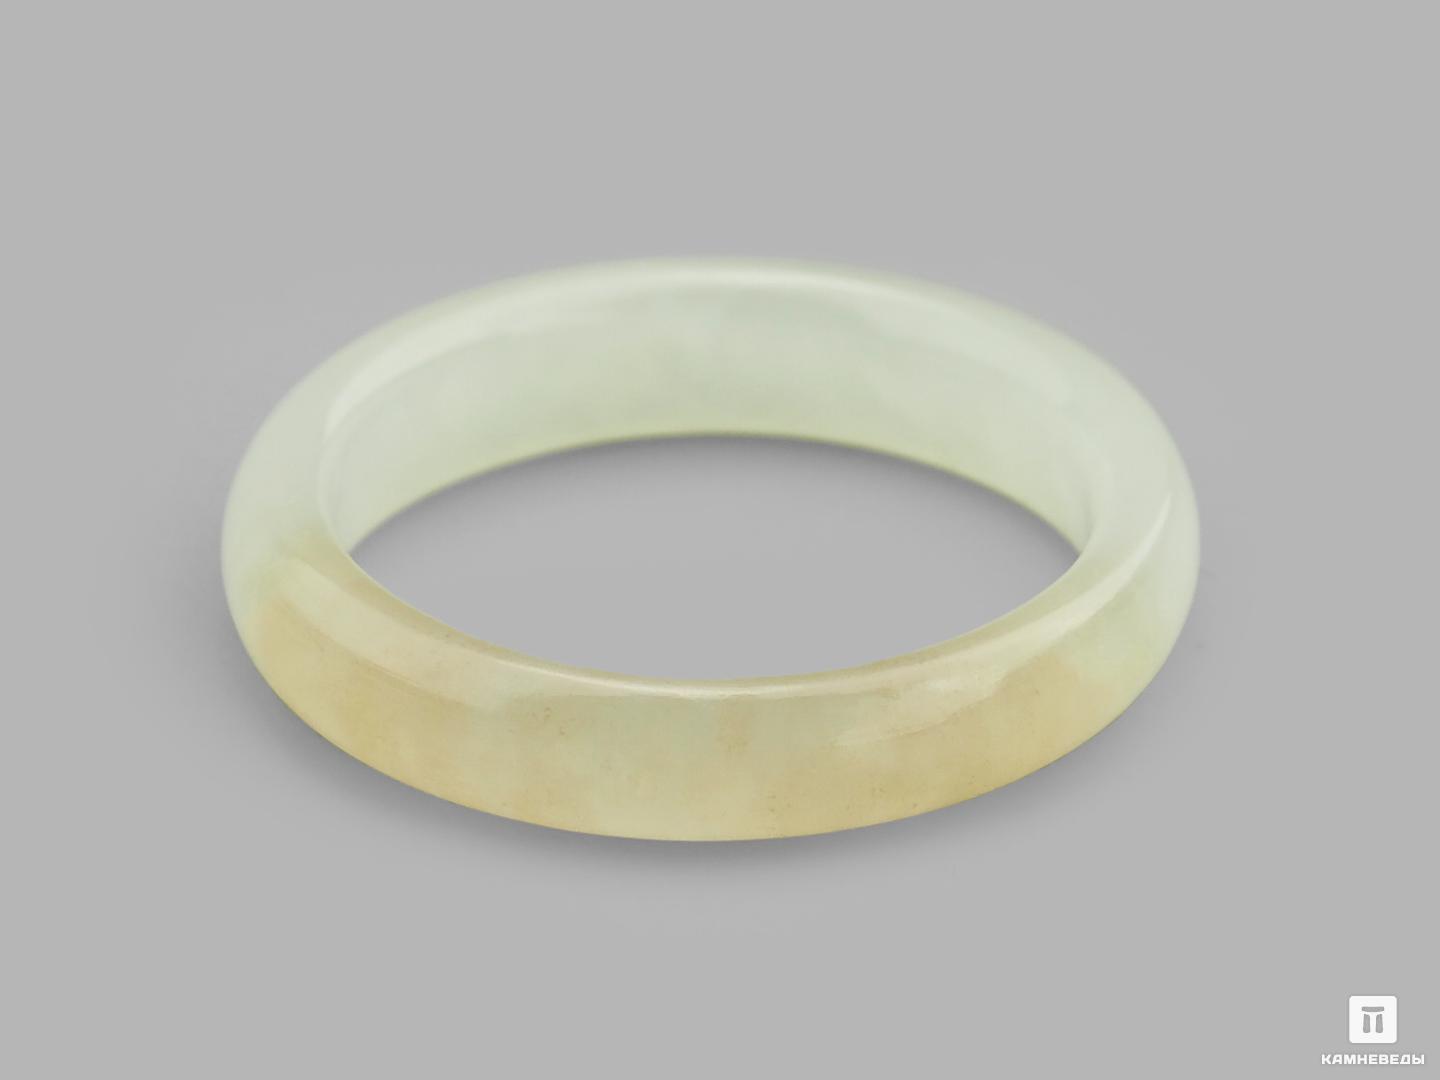 Кольцо из нефрита светлого, ширина 4-5 мм, 21802, фото 1